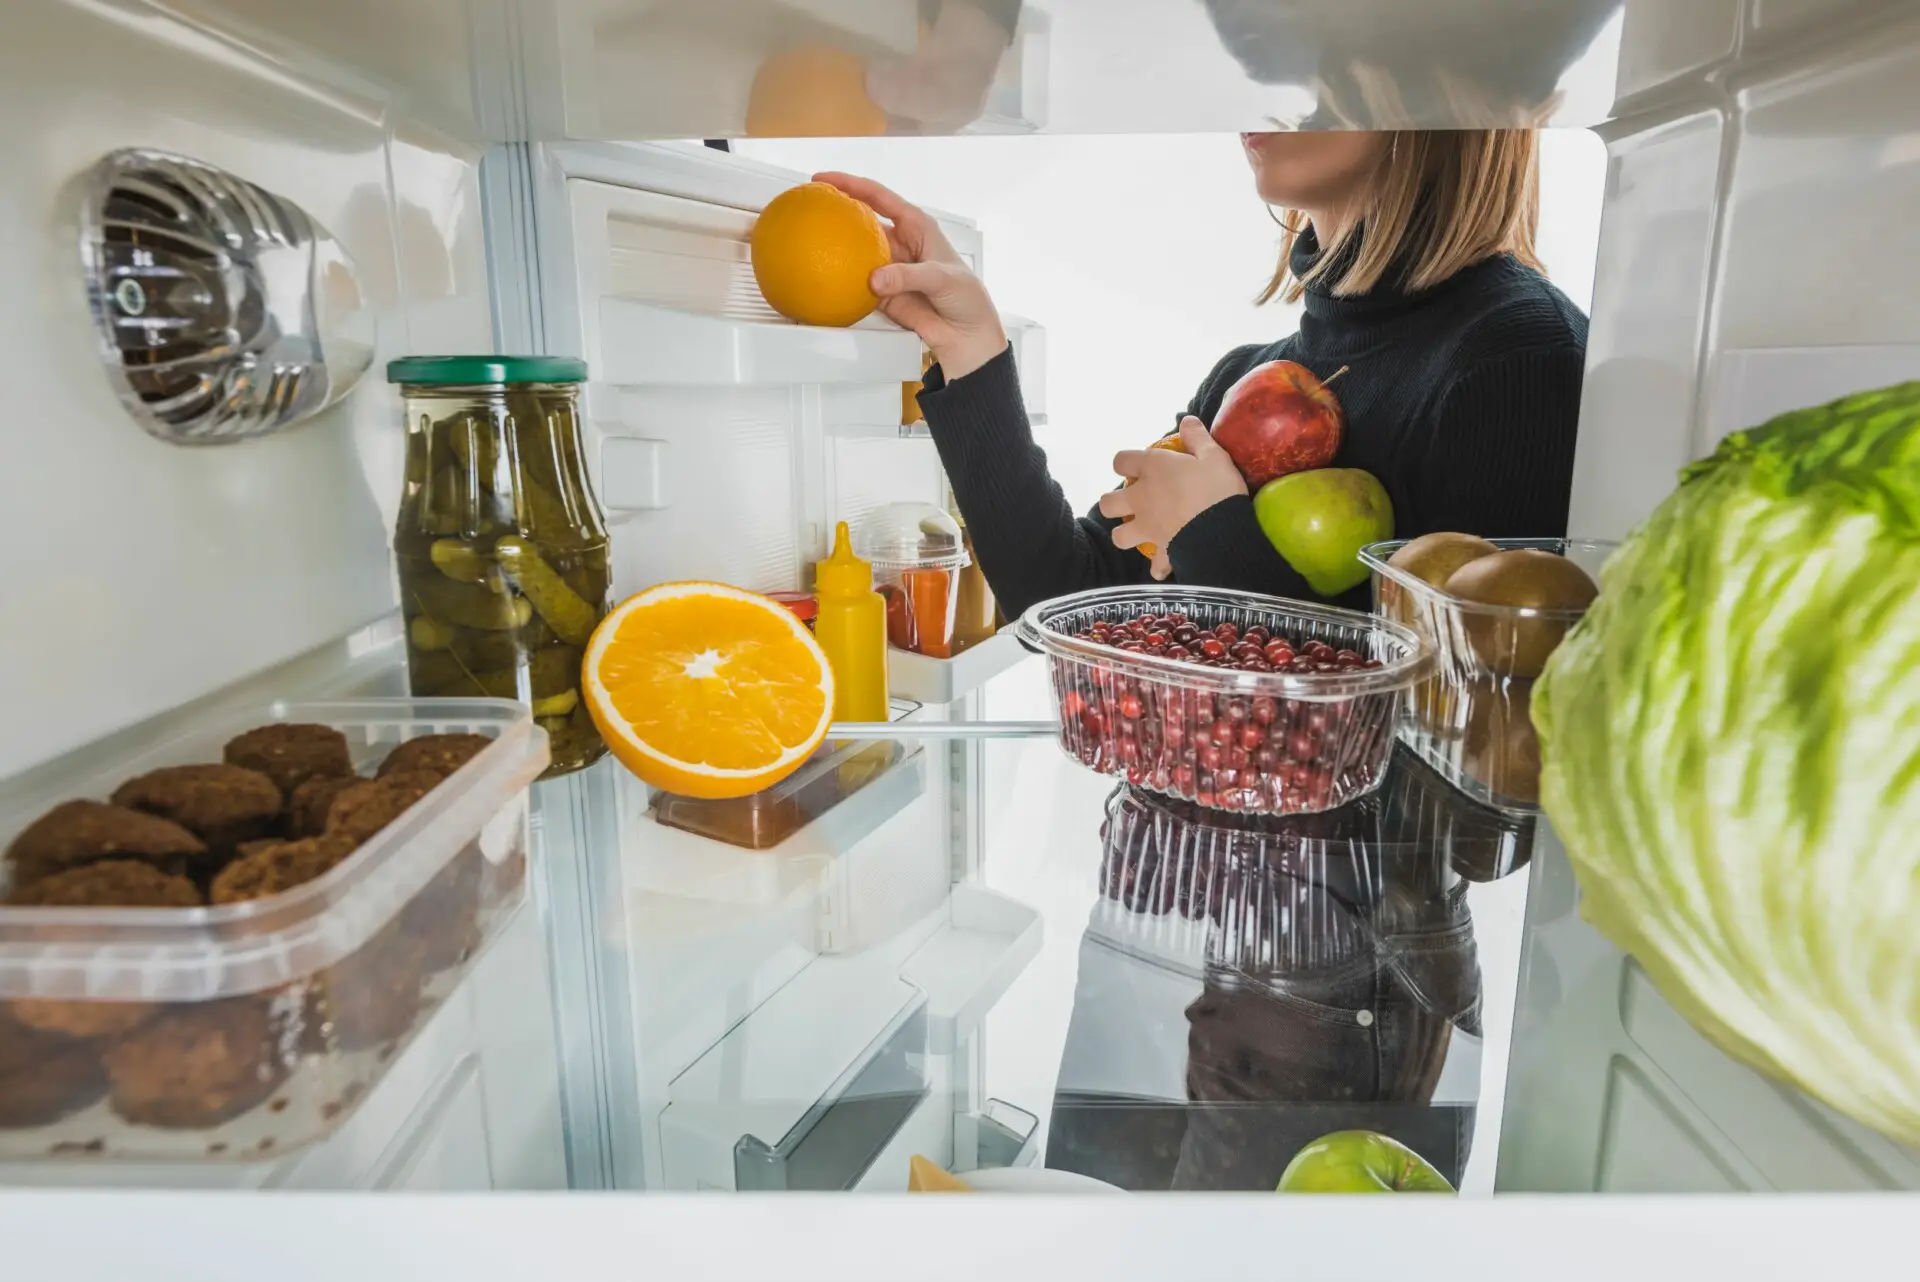 Neuer Kühlschrank: wann darf man ihn befüllen? 6 wichtige Infos